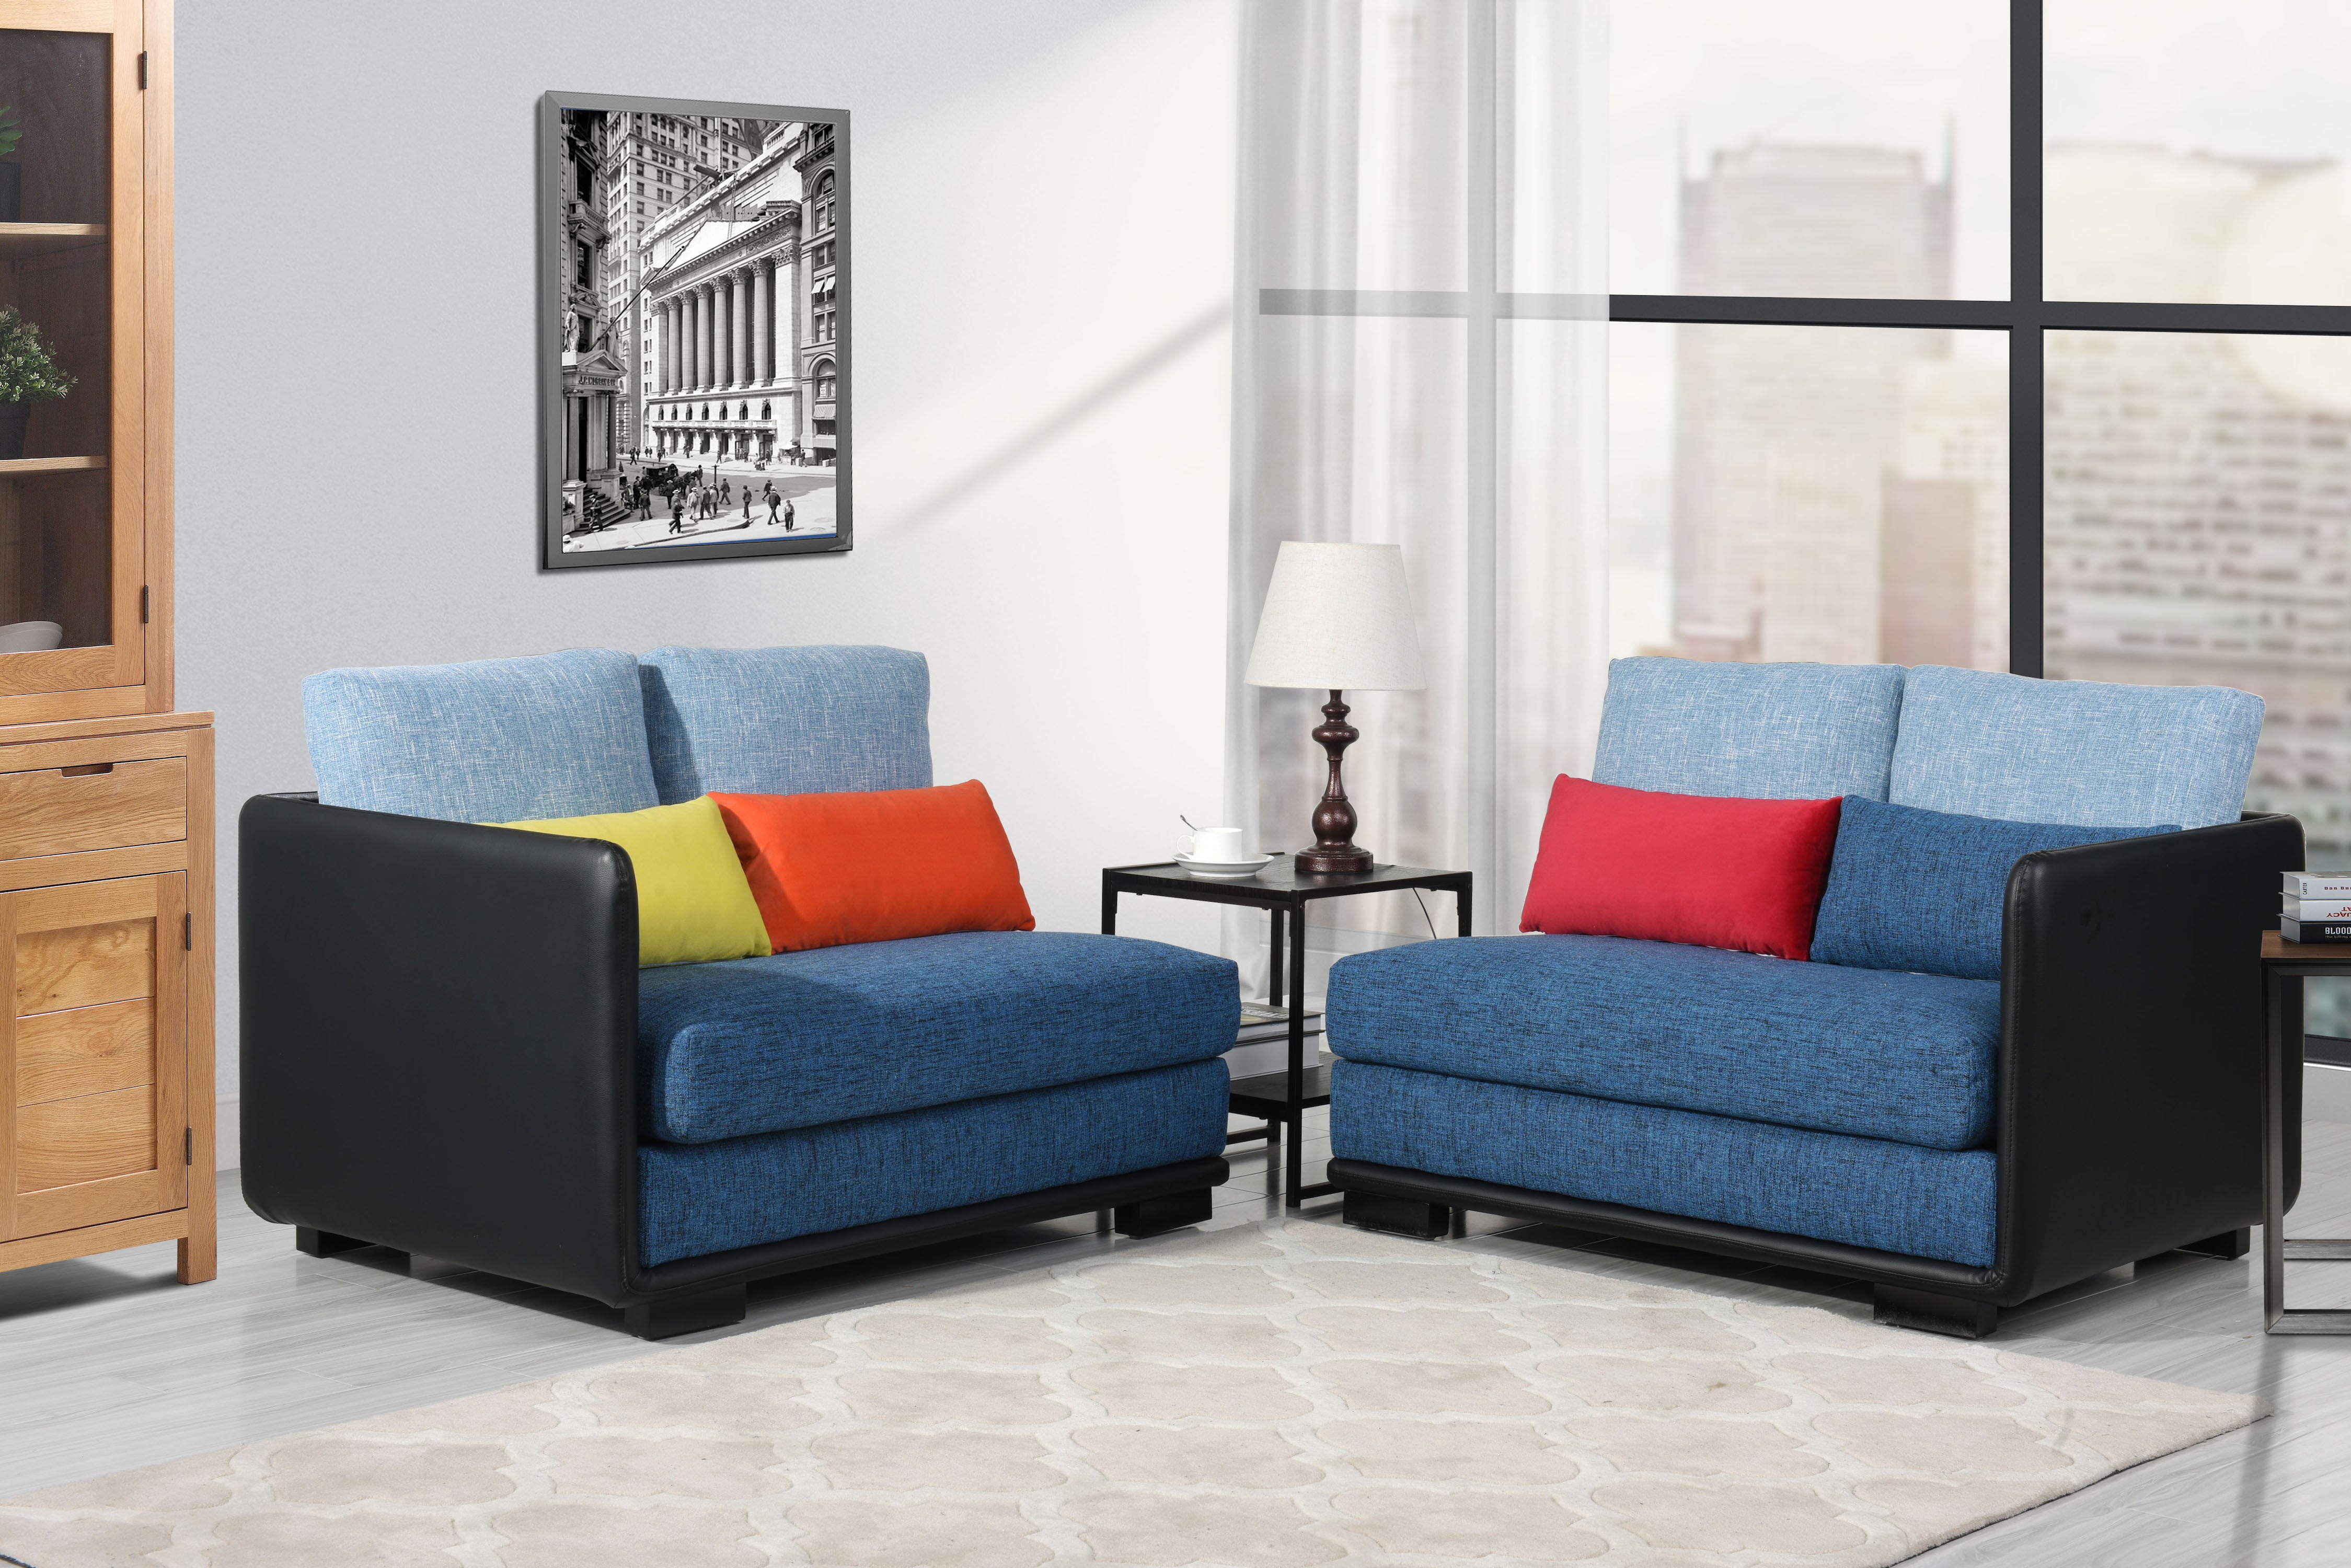 Nova Contemporary Convertible Sofa with Colorful Accent Pillows